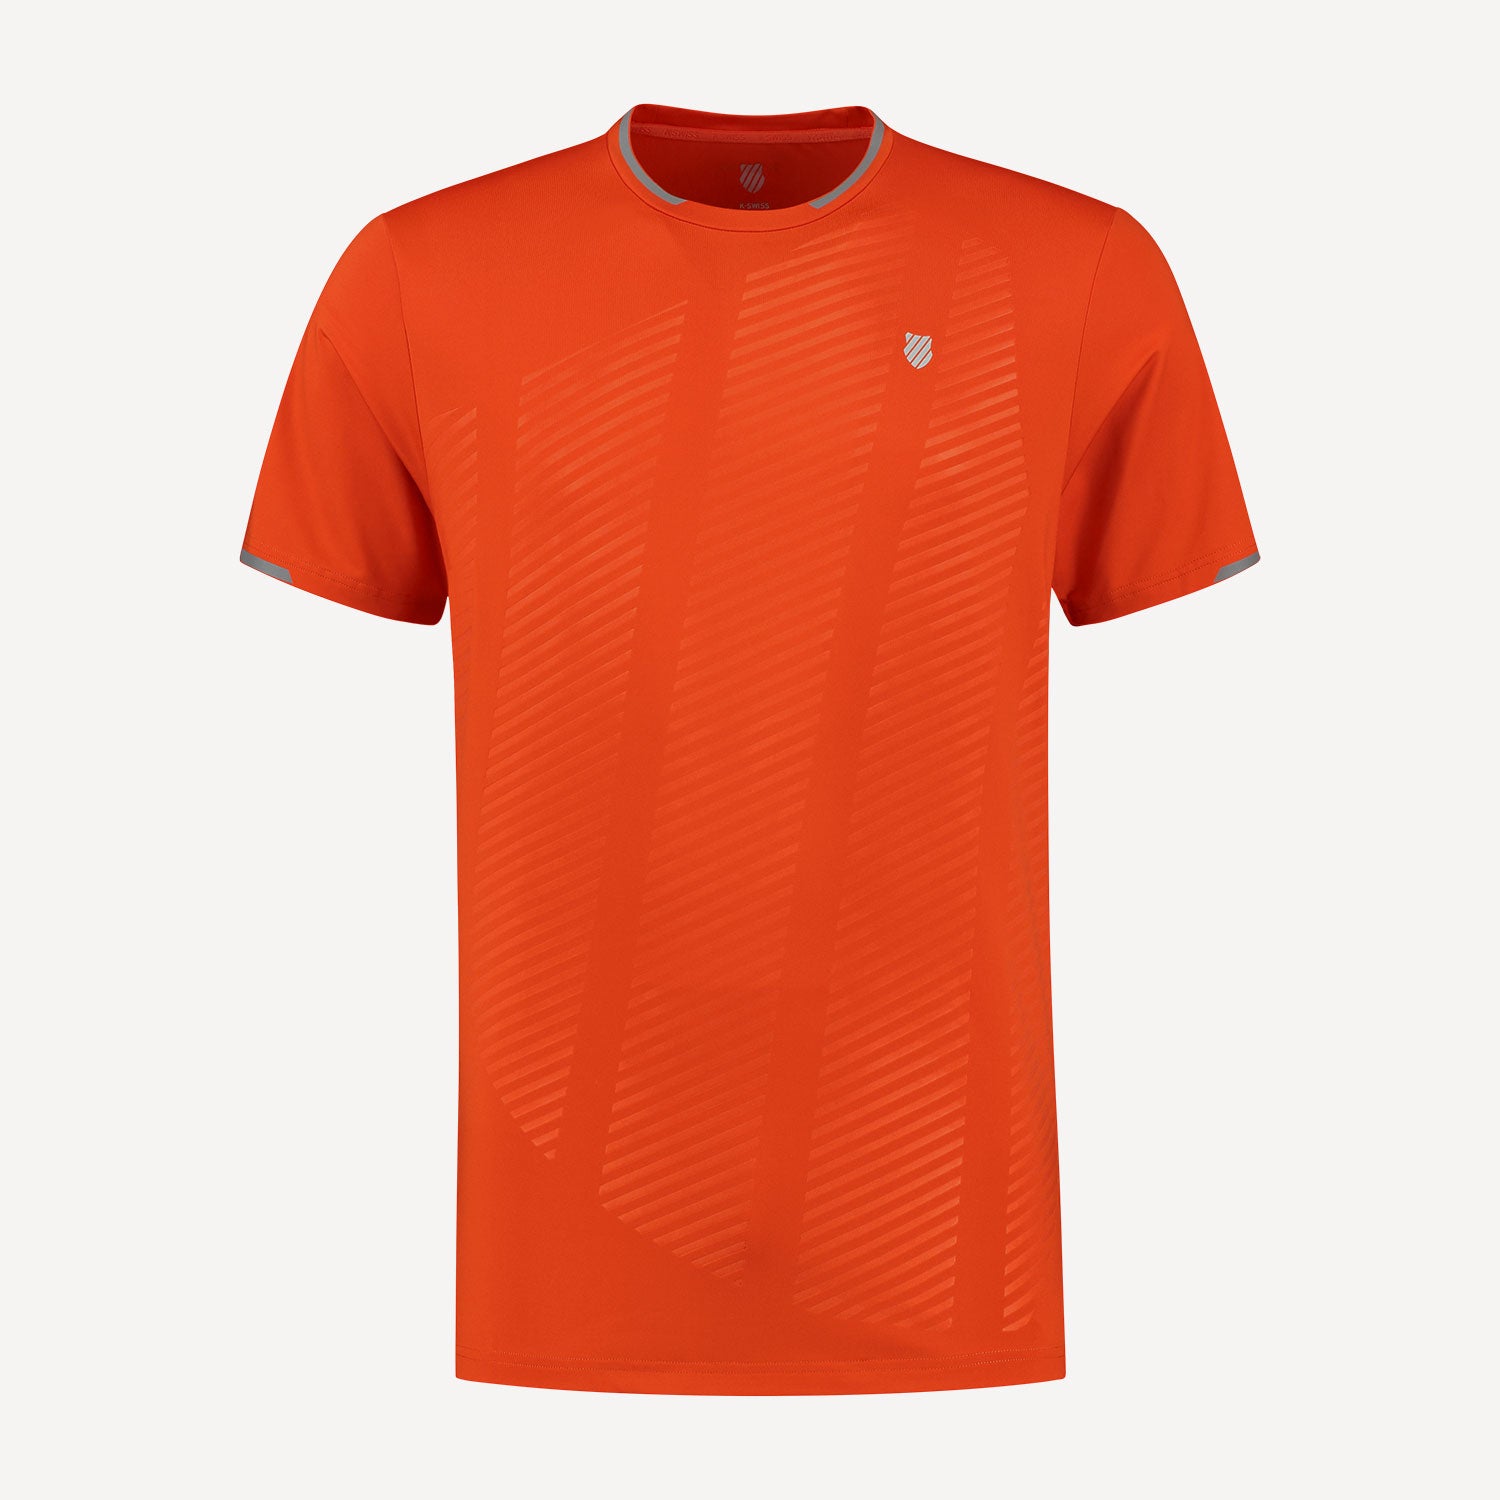 K-Swiss Hypercourt Shield Men's Tennis Shirt Orange (1)